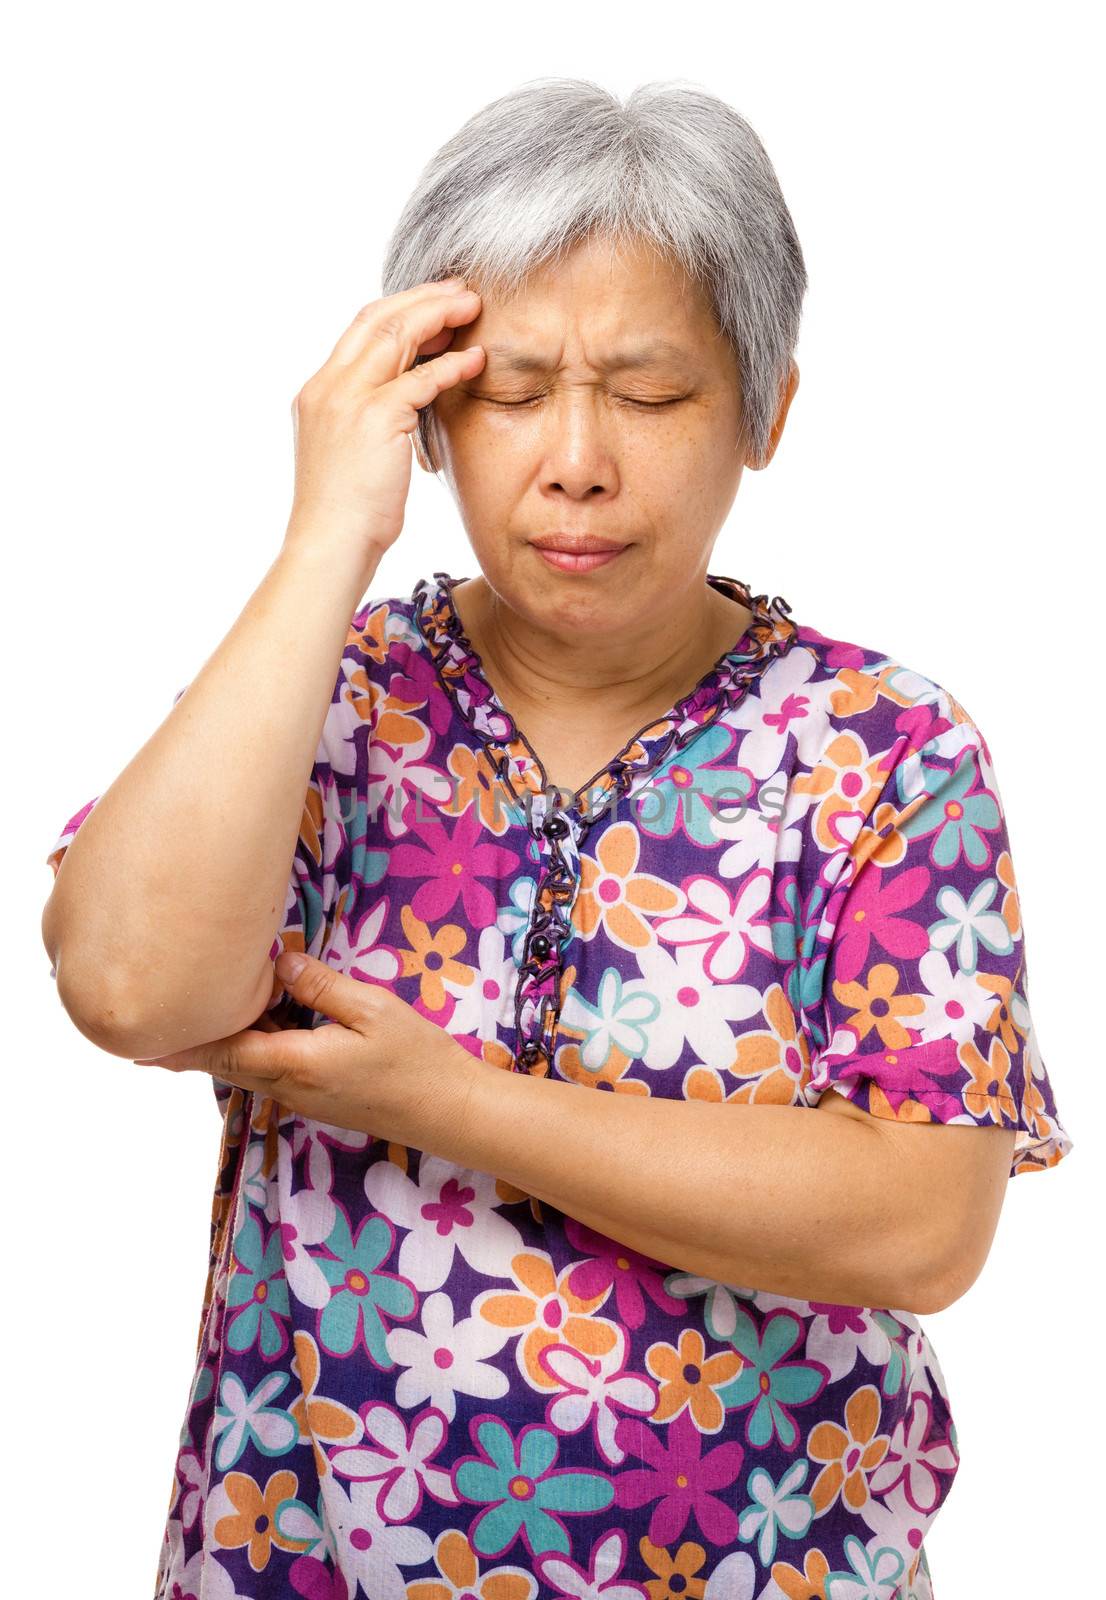 Old woman seriously headache by leungchopan